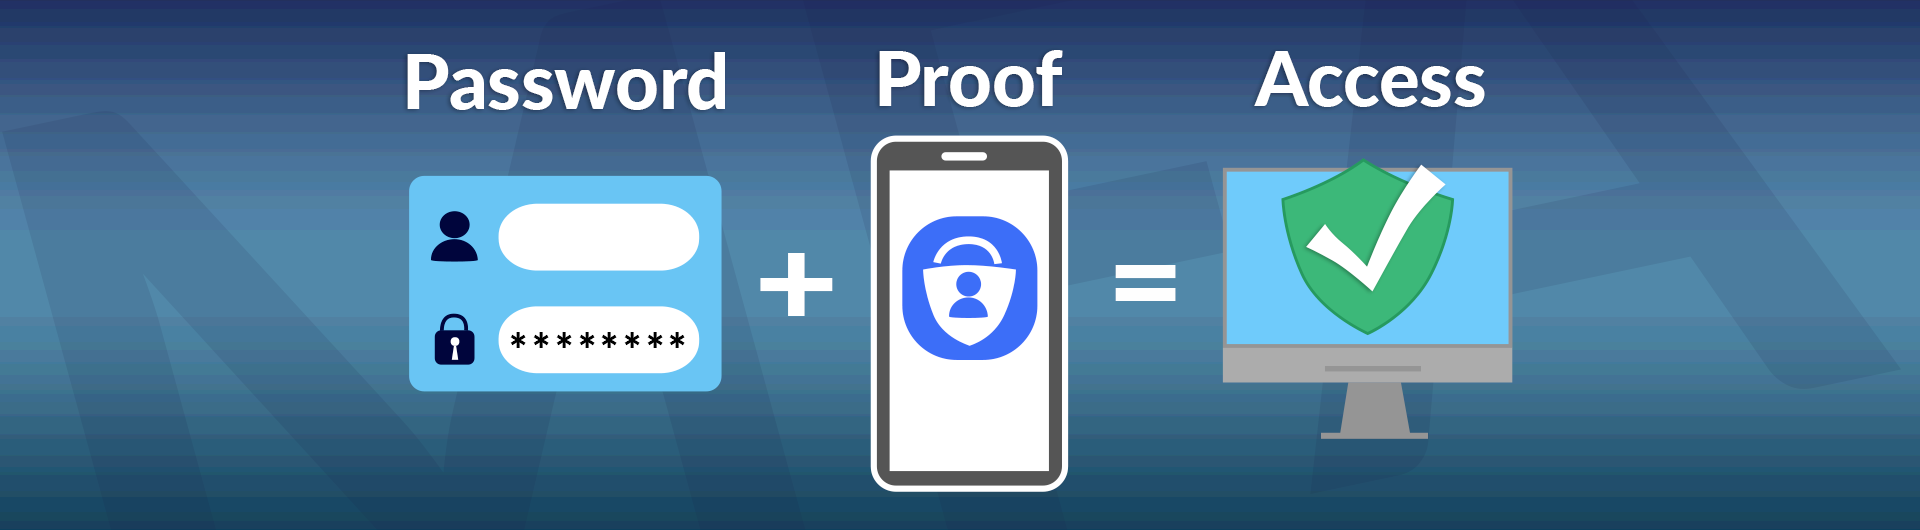 MFA Password + Proof = Access